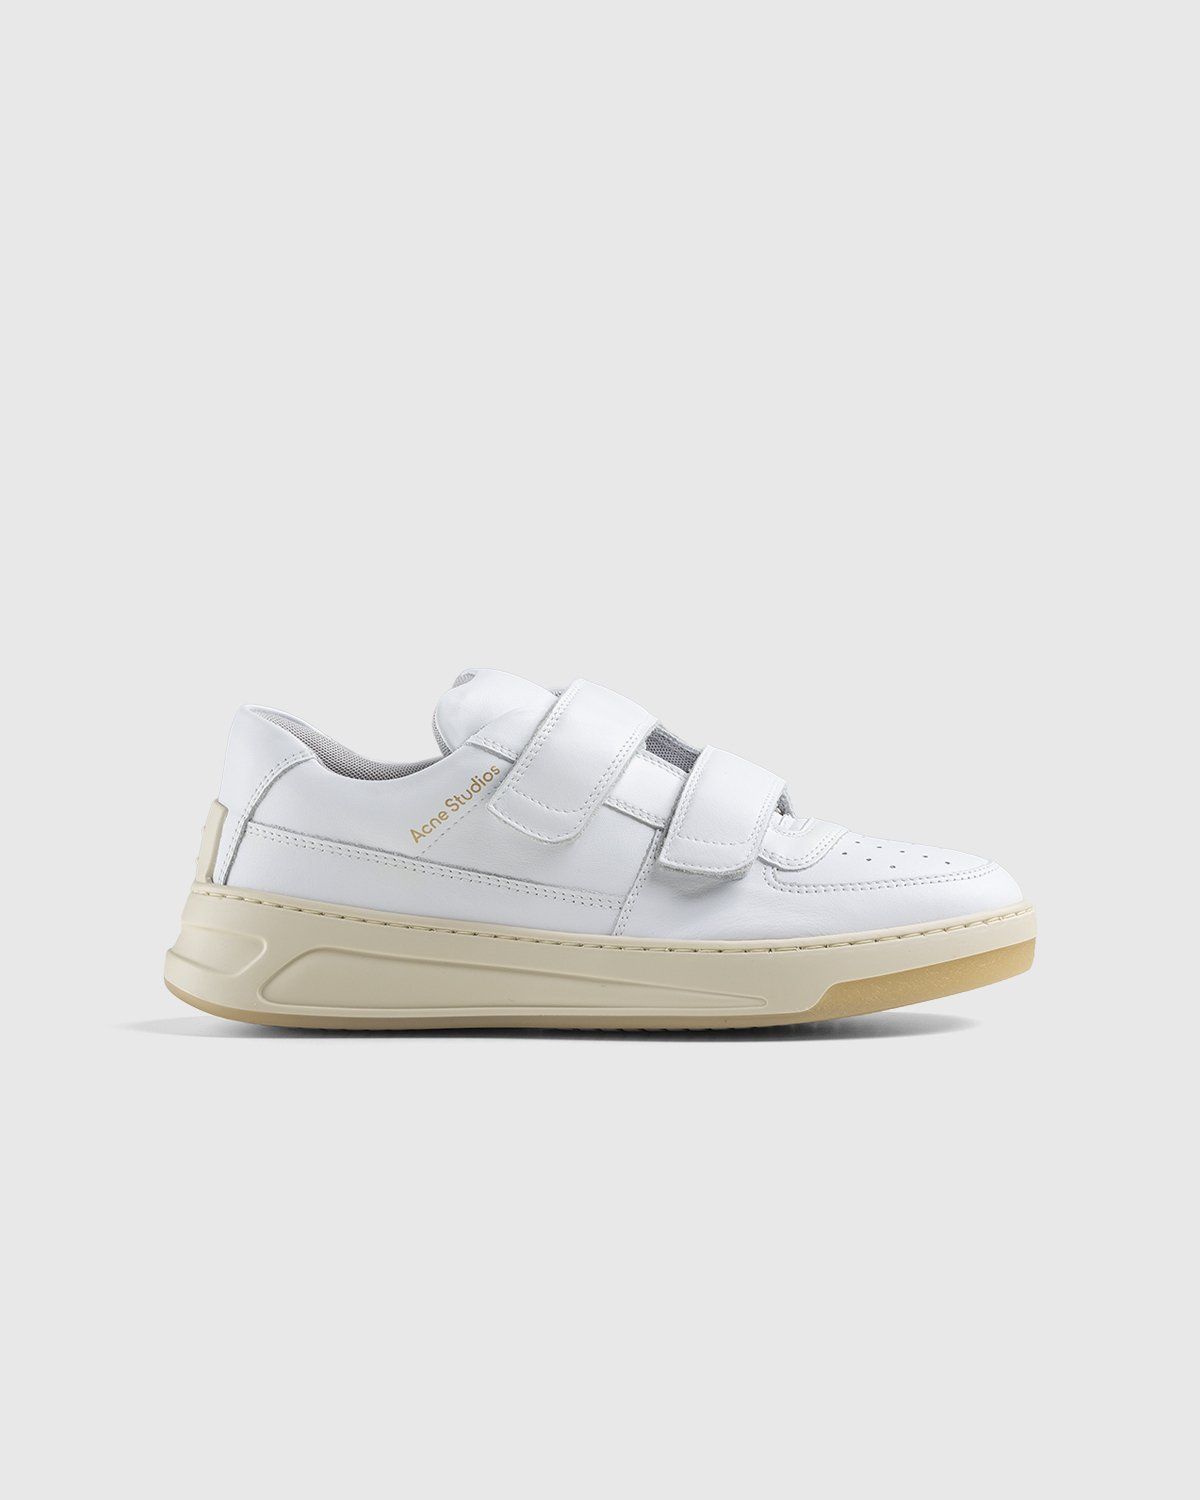 Acne Studios – Perey Velcro Strap Sneakers White - Image 1